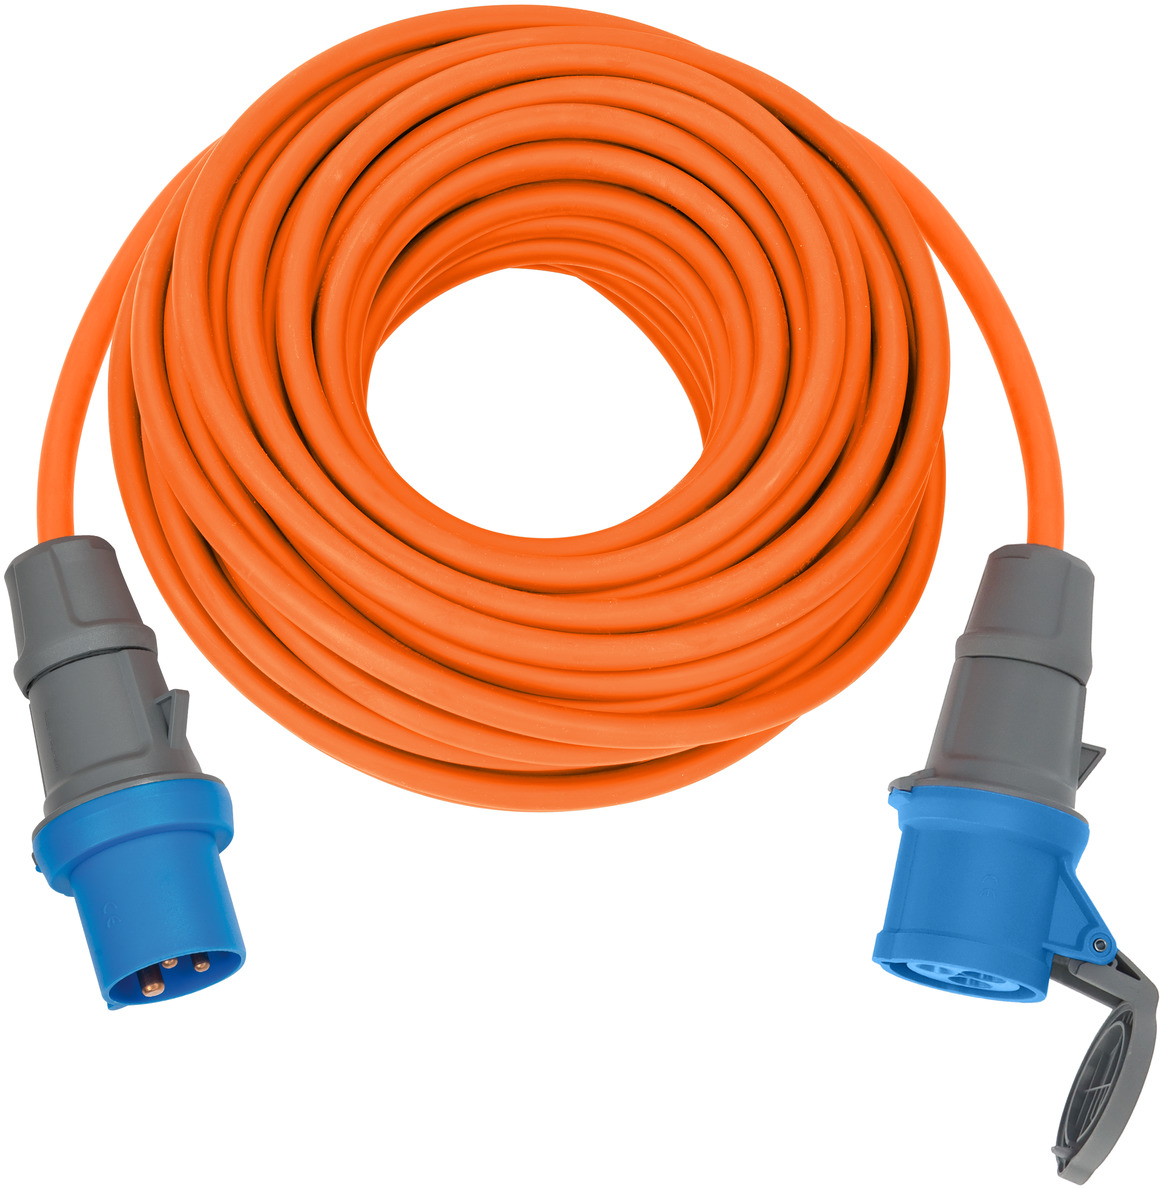 Cable alargador CEE IP44 para camping/marítimo 25m H07RN-F 3G2,5 naranja  CEE 230V/16A enchufe y acoplamiento